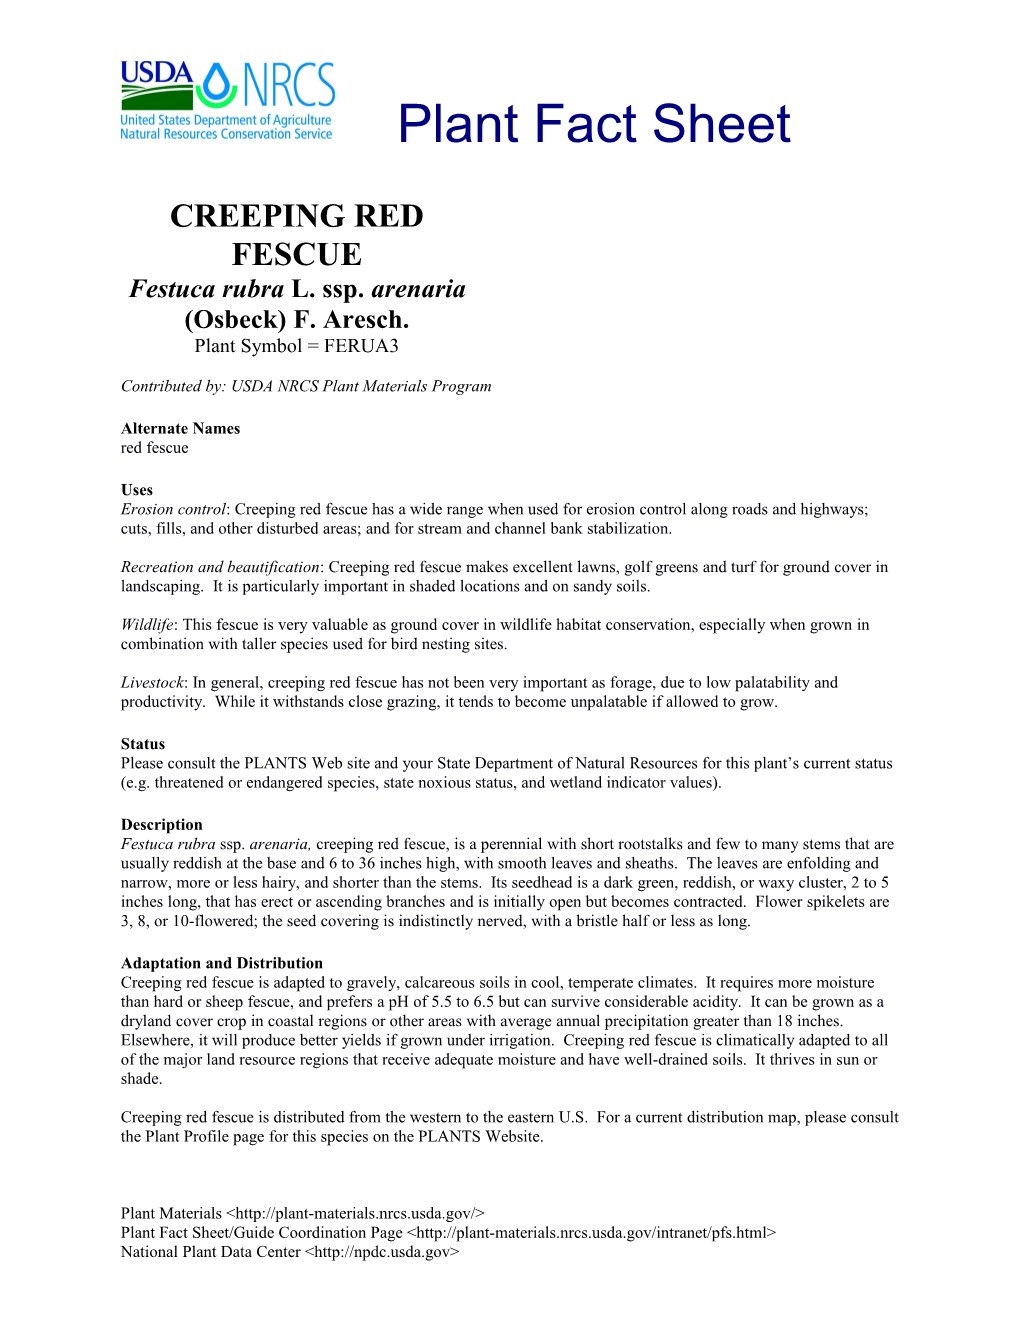 Creeping Red Fescue